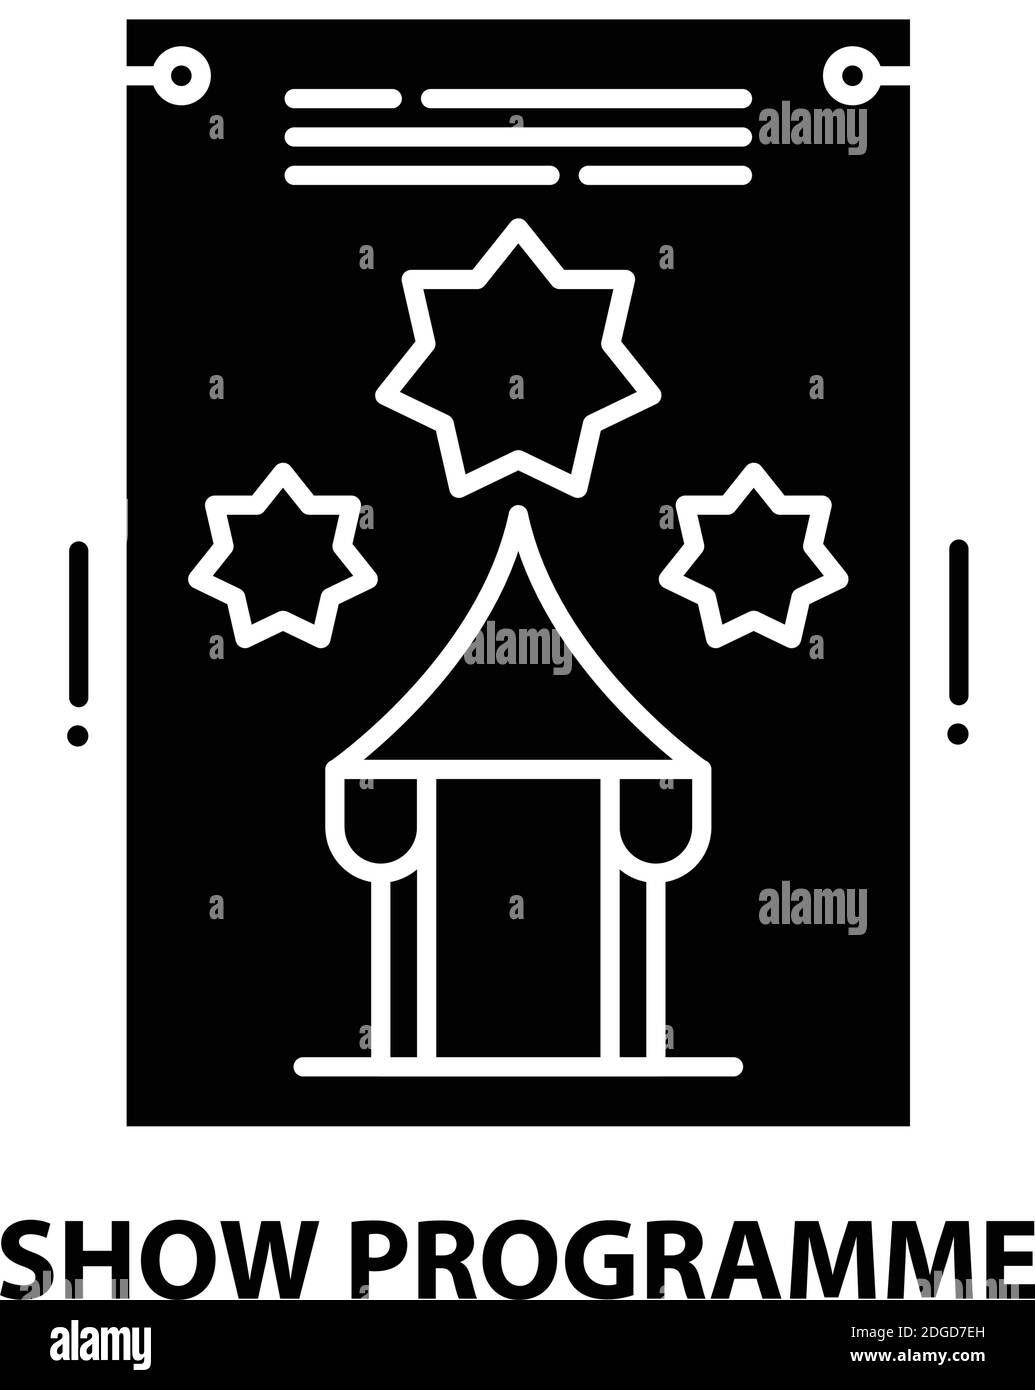 show programme icon, black vector sign with editable strokes, concept illustration Stock Vector